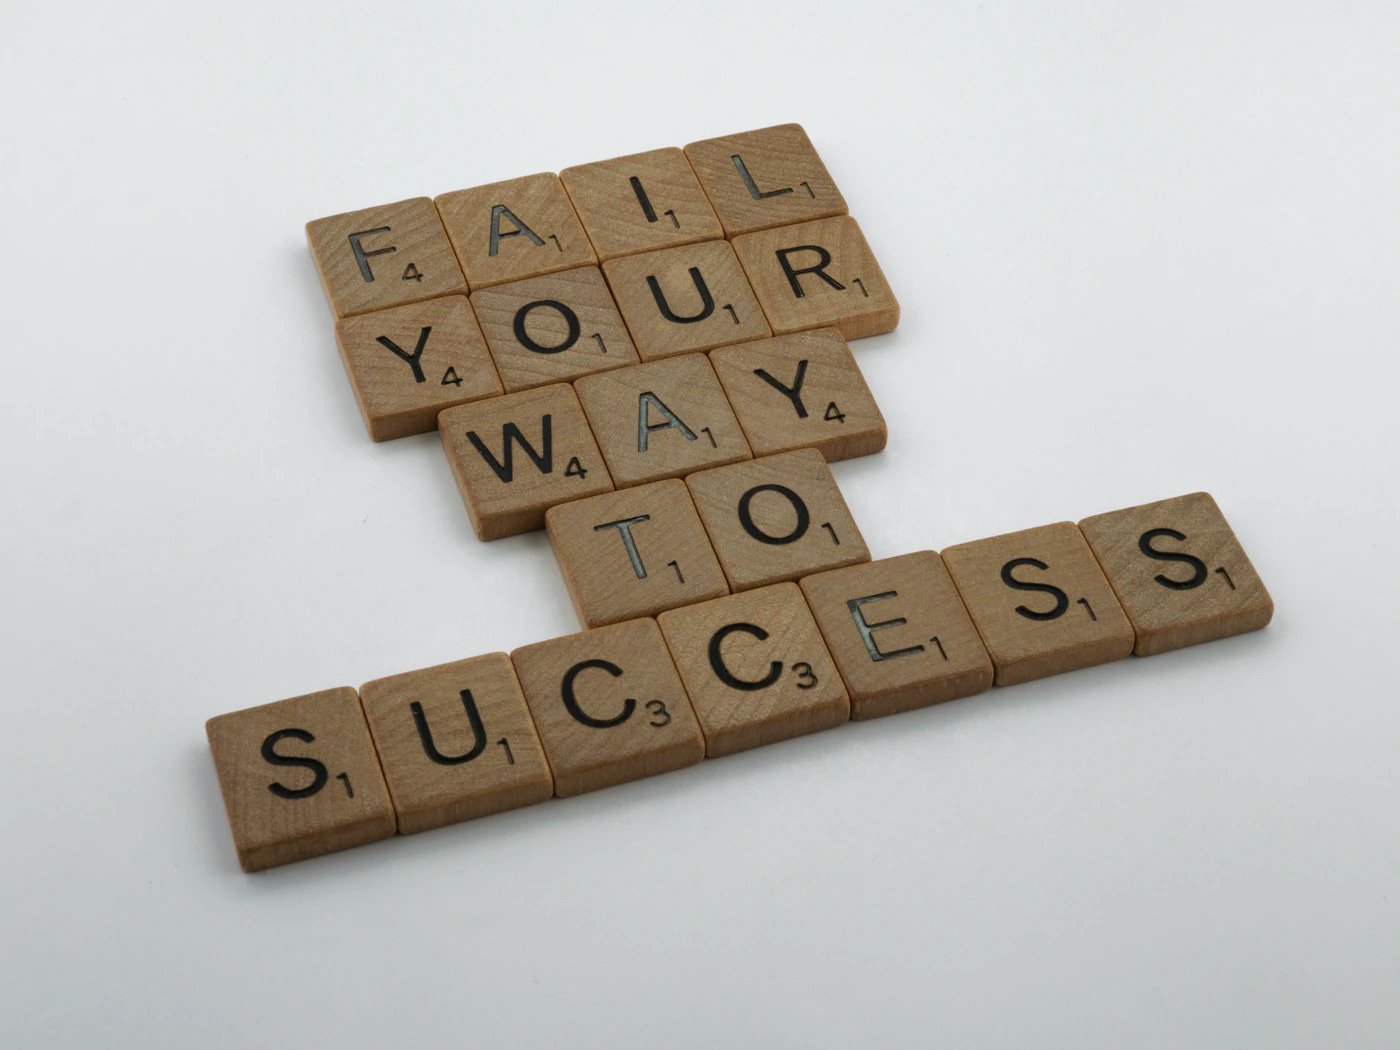 Fail Your Way To Success